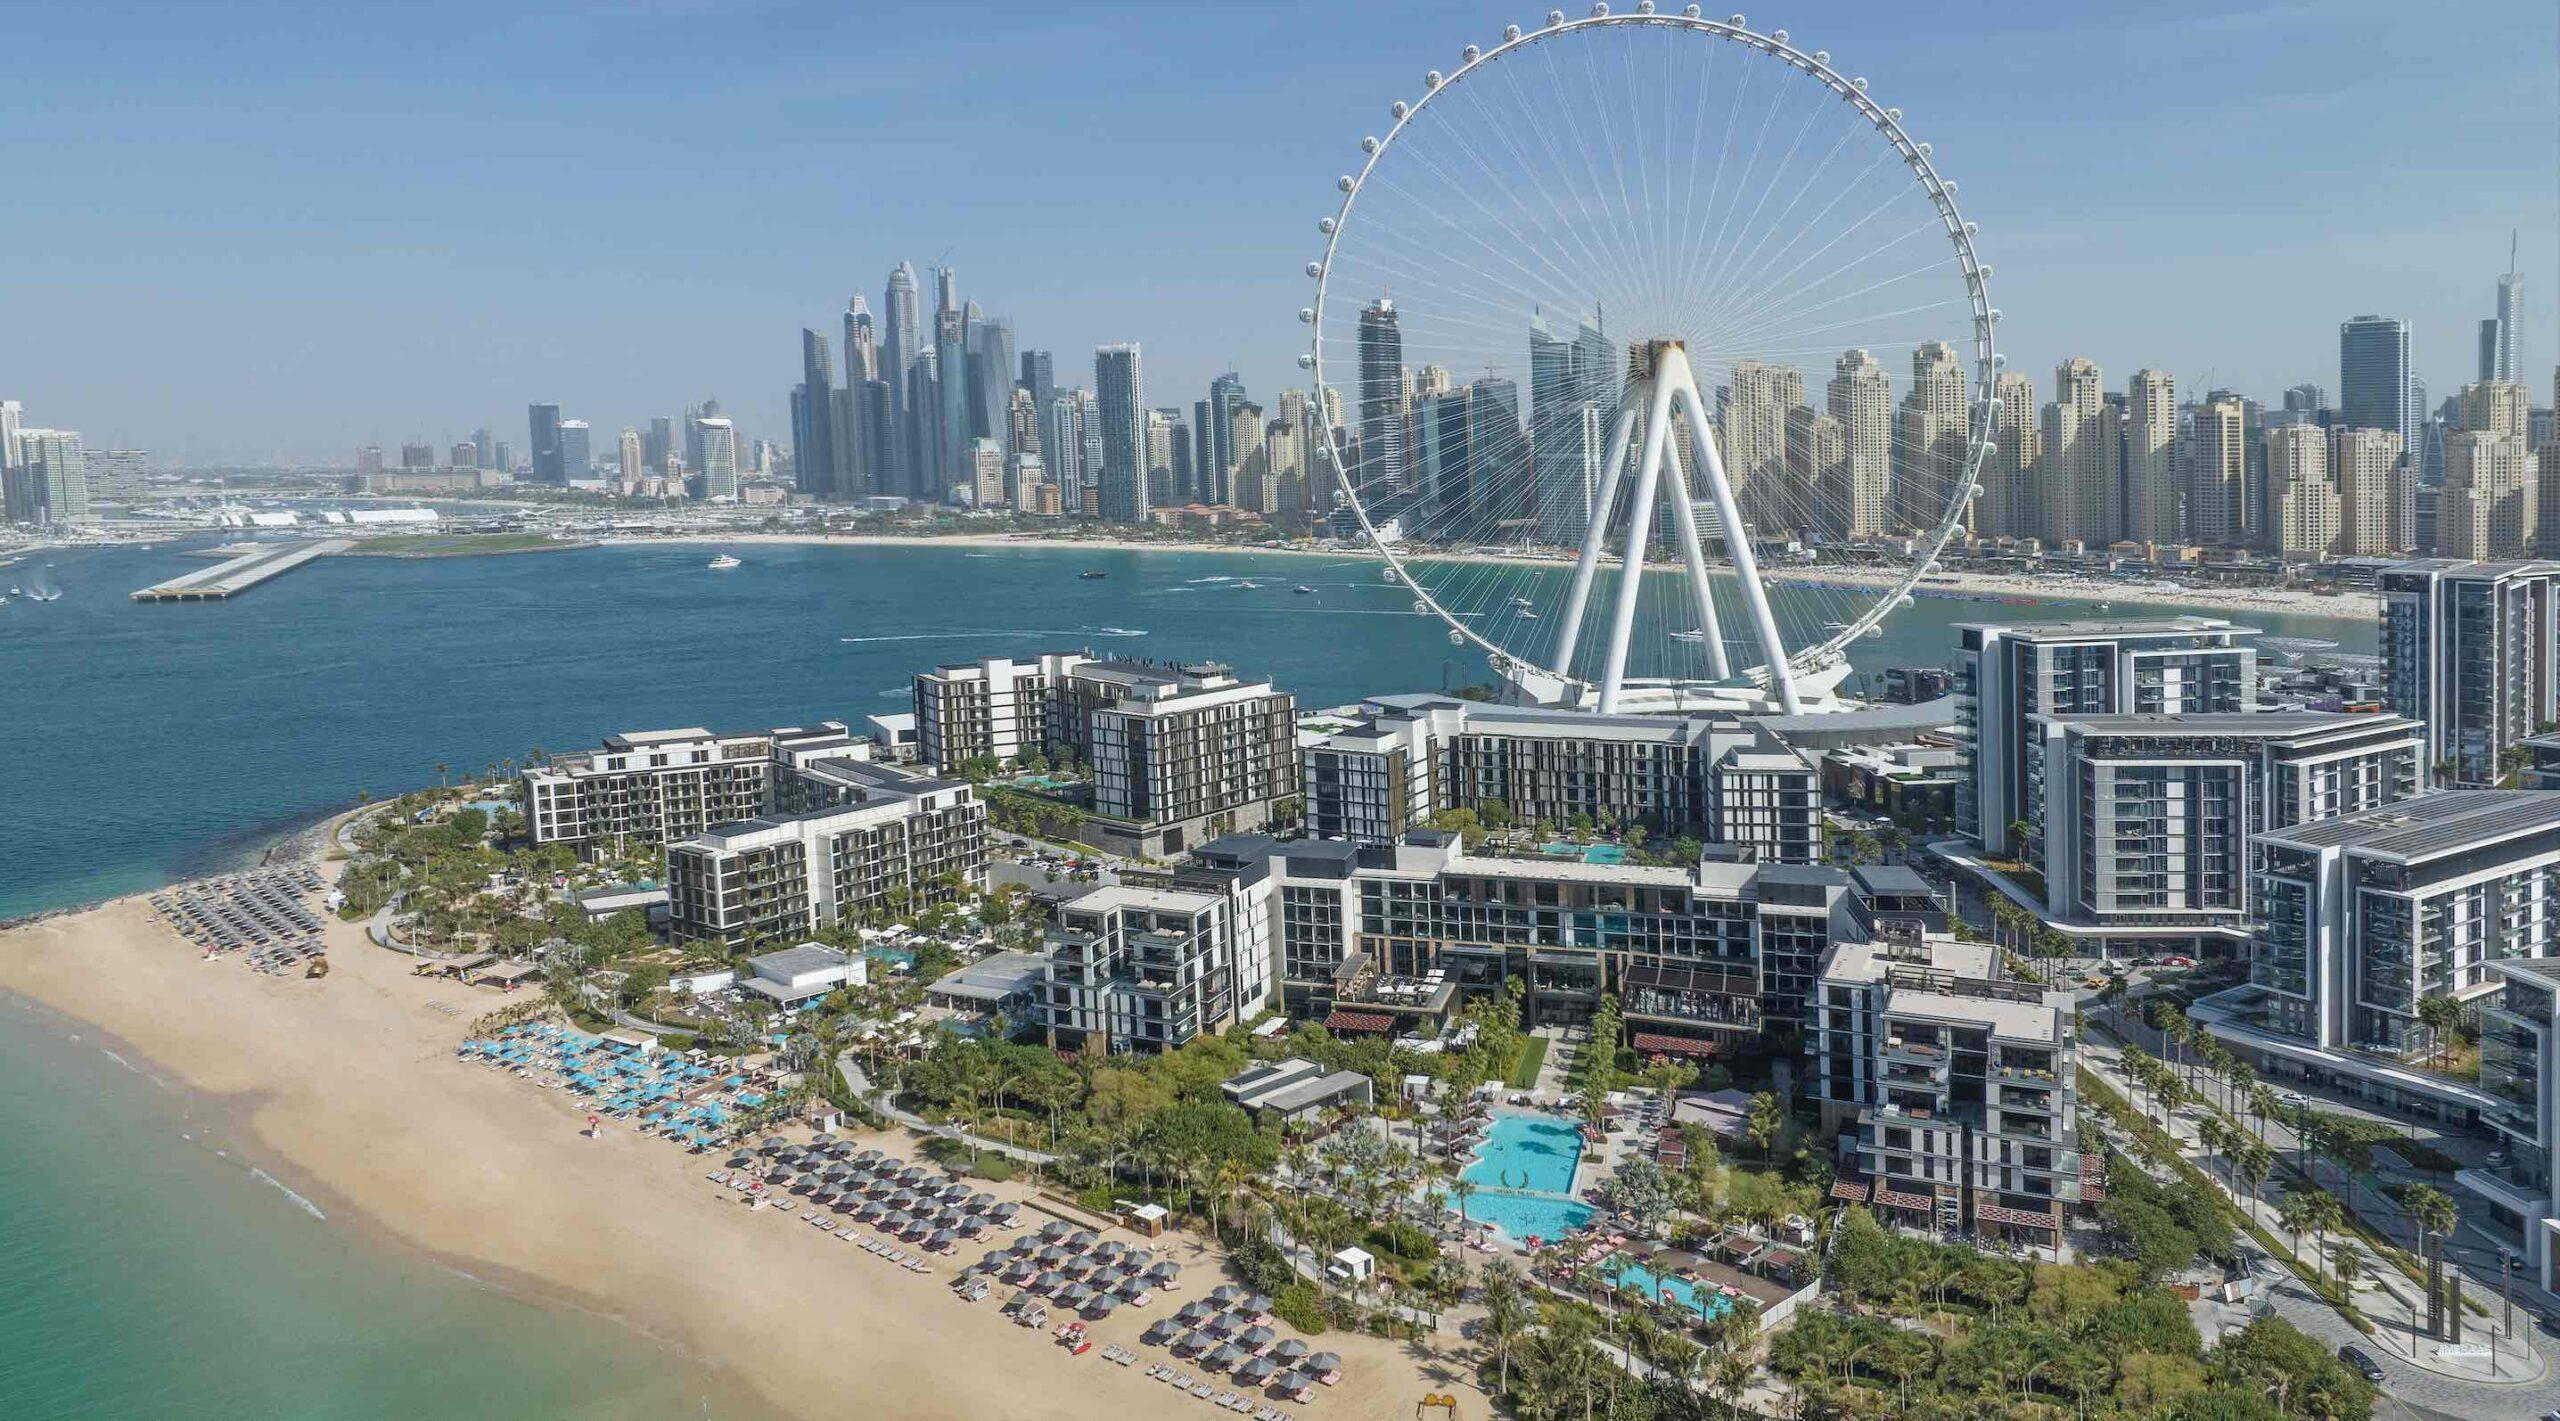 Ennismore brings luxury hotel brand Delano to Dubai